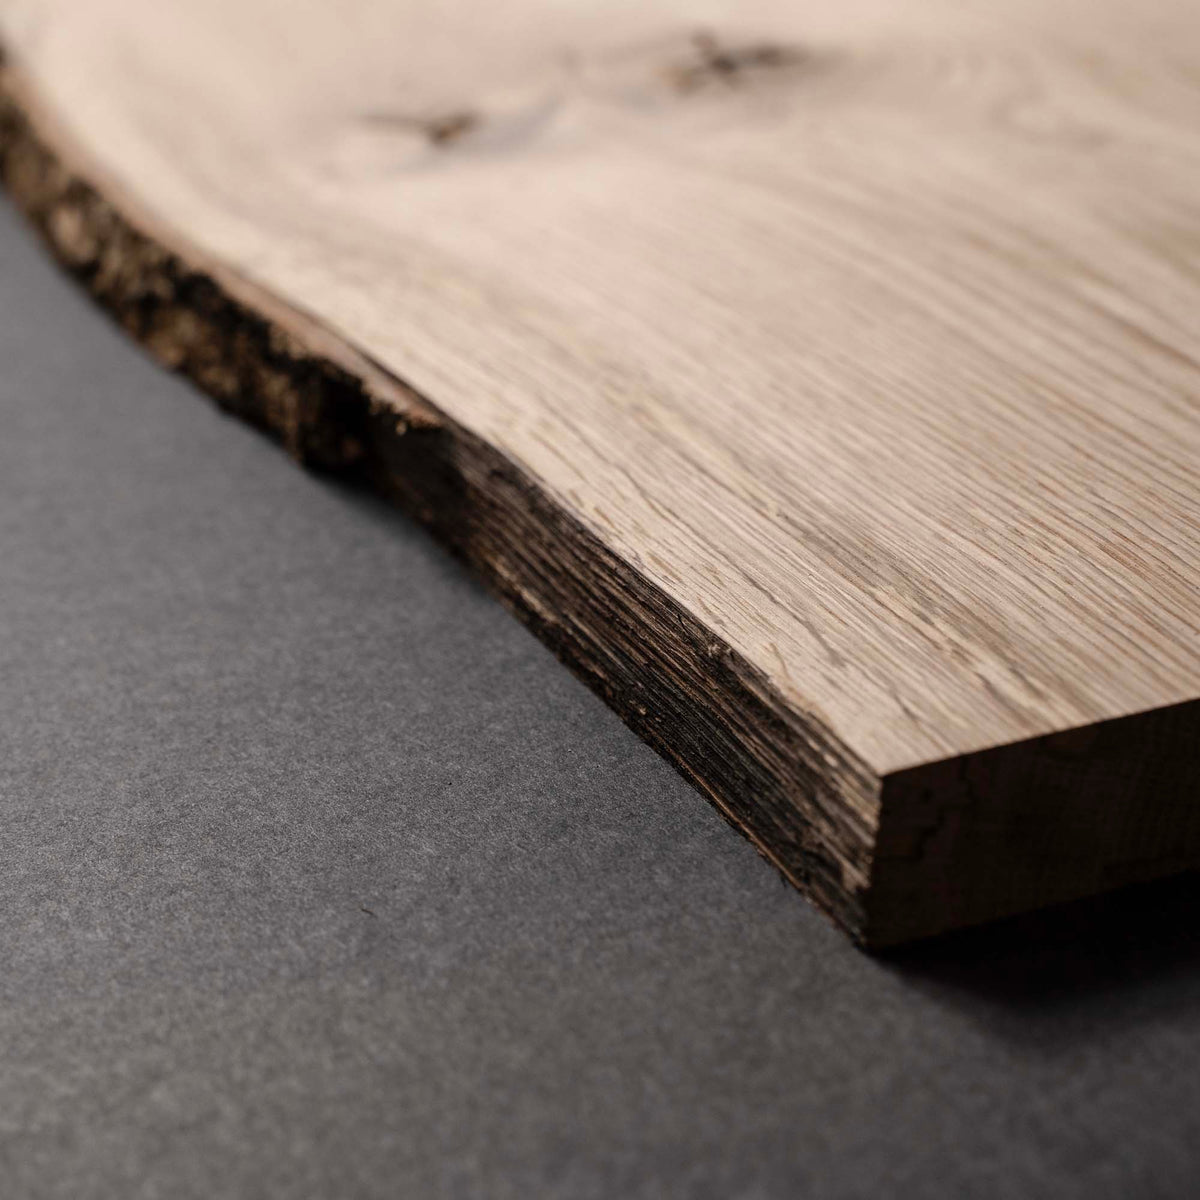 4/4 1” Live Edge White Oak Boards - Kiln Dried Dimensional Lumber - Cut to Size - DIY project wood board - Shelf Boards - American Hardwoods